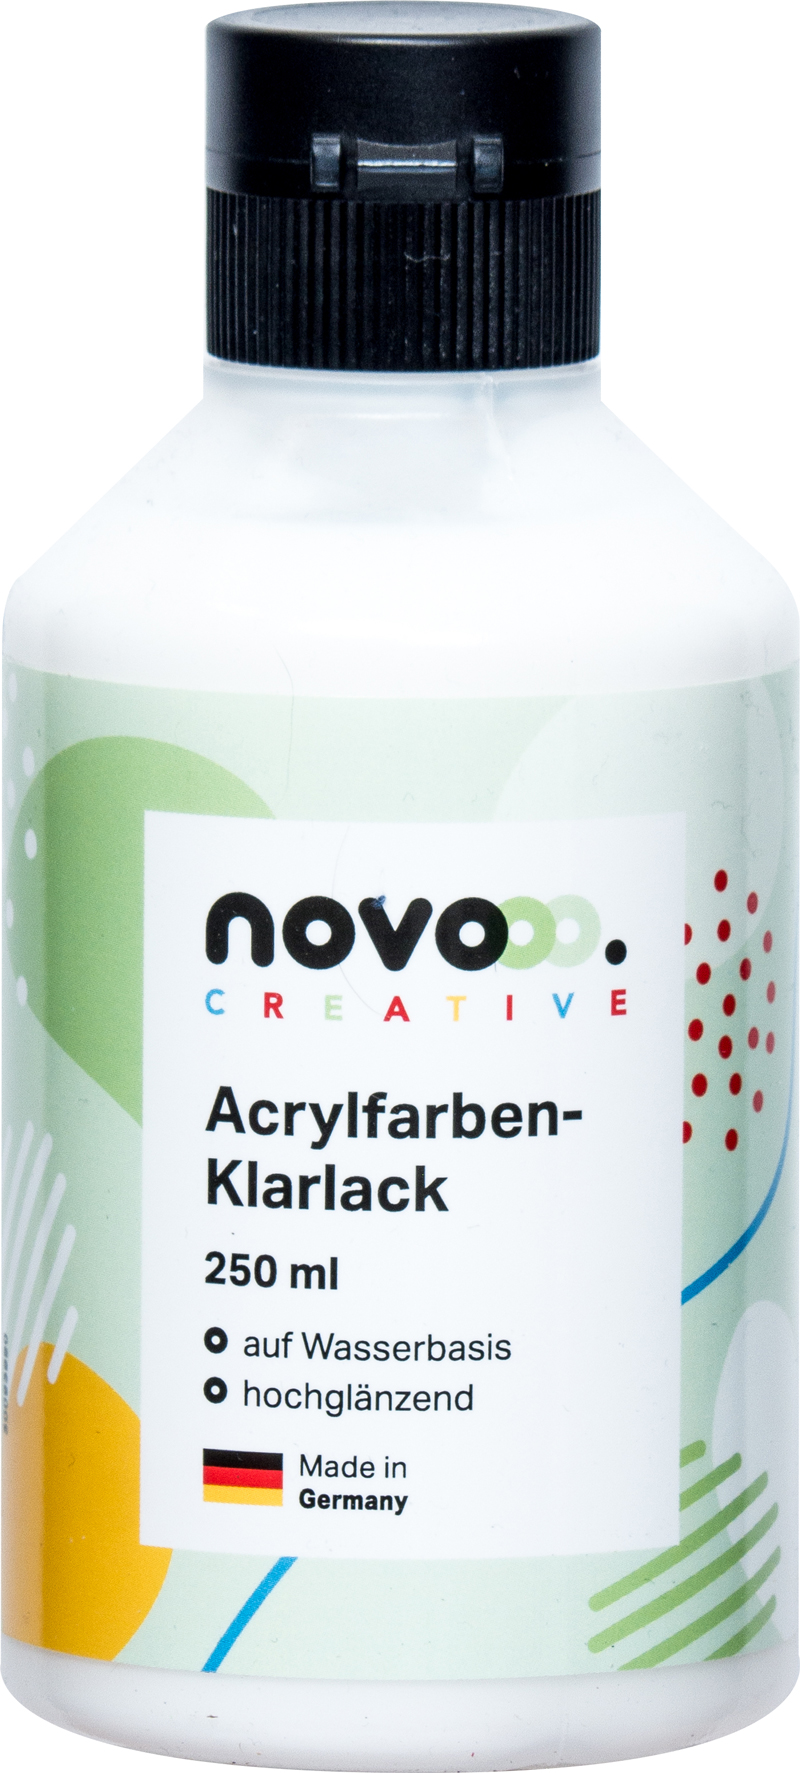 NOVOOO Creative Acrylfarben-Klarlack 250 ml